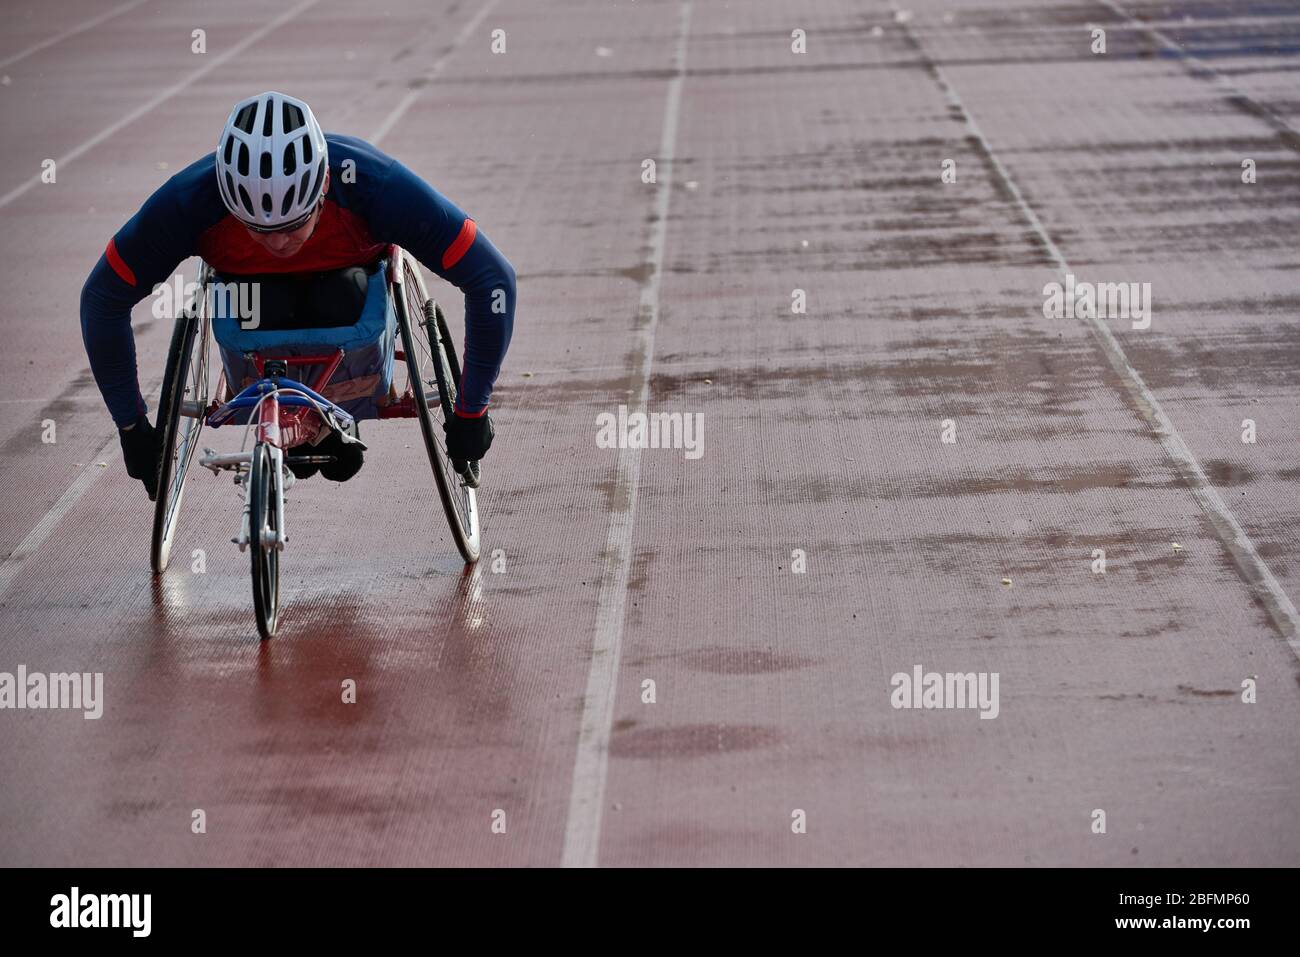 Preparing for wheelchair marathon. Paraplegic male athlete in racing wheelchair warming up alone at outdoor track and field stadium Stock Photo